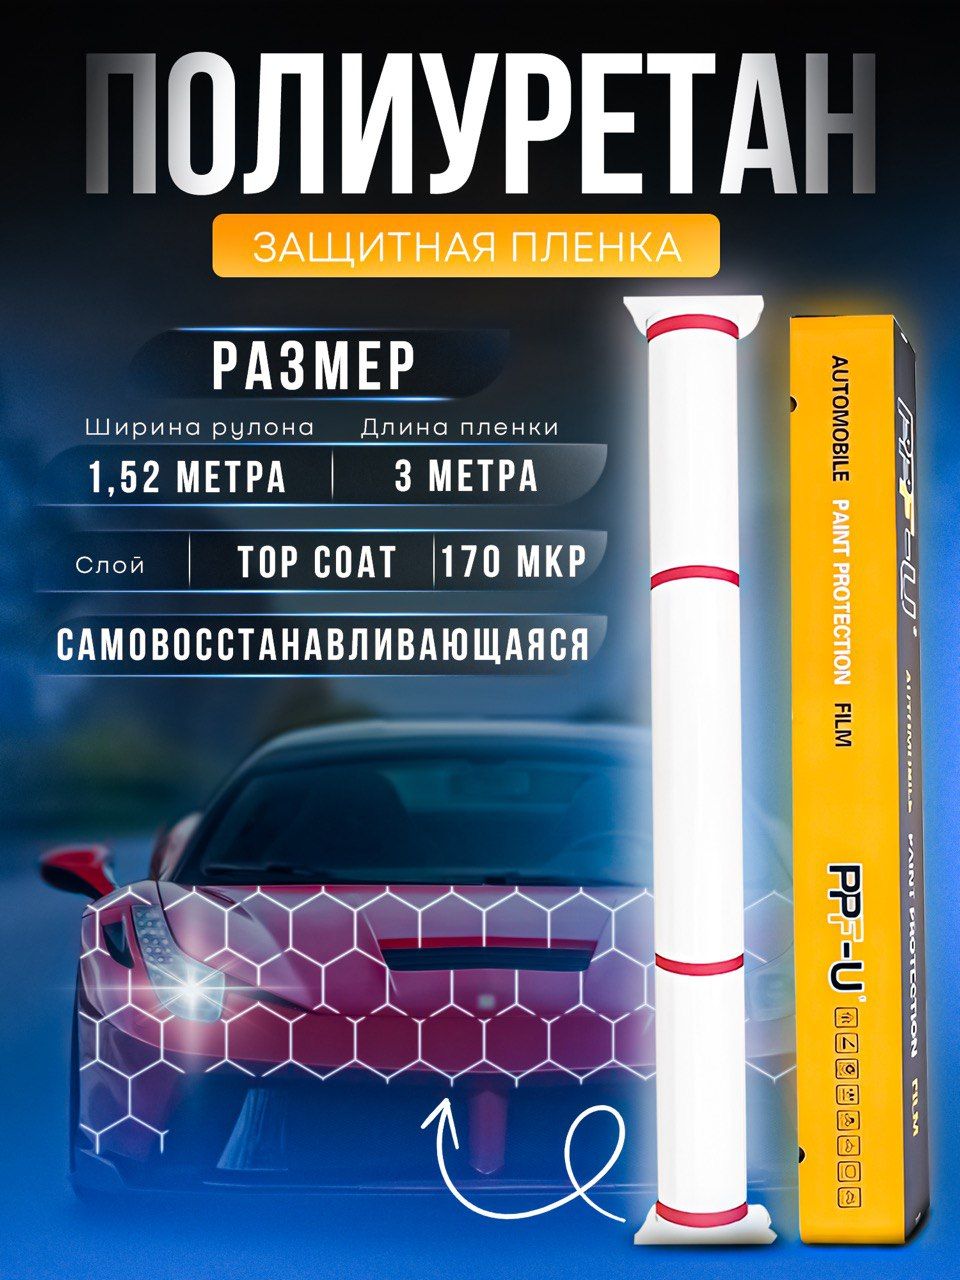 Защитная пленка PPH-U 1.52*3 м, для авто, полиуретан